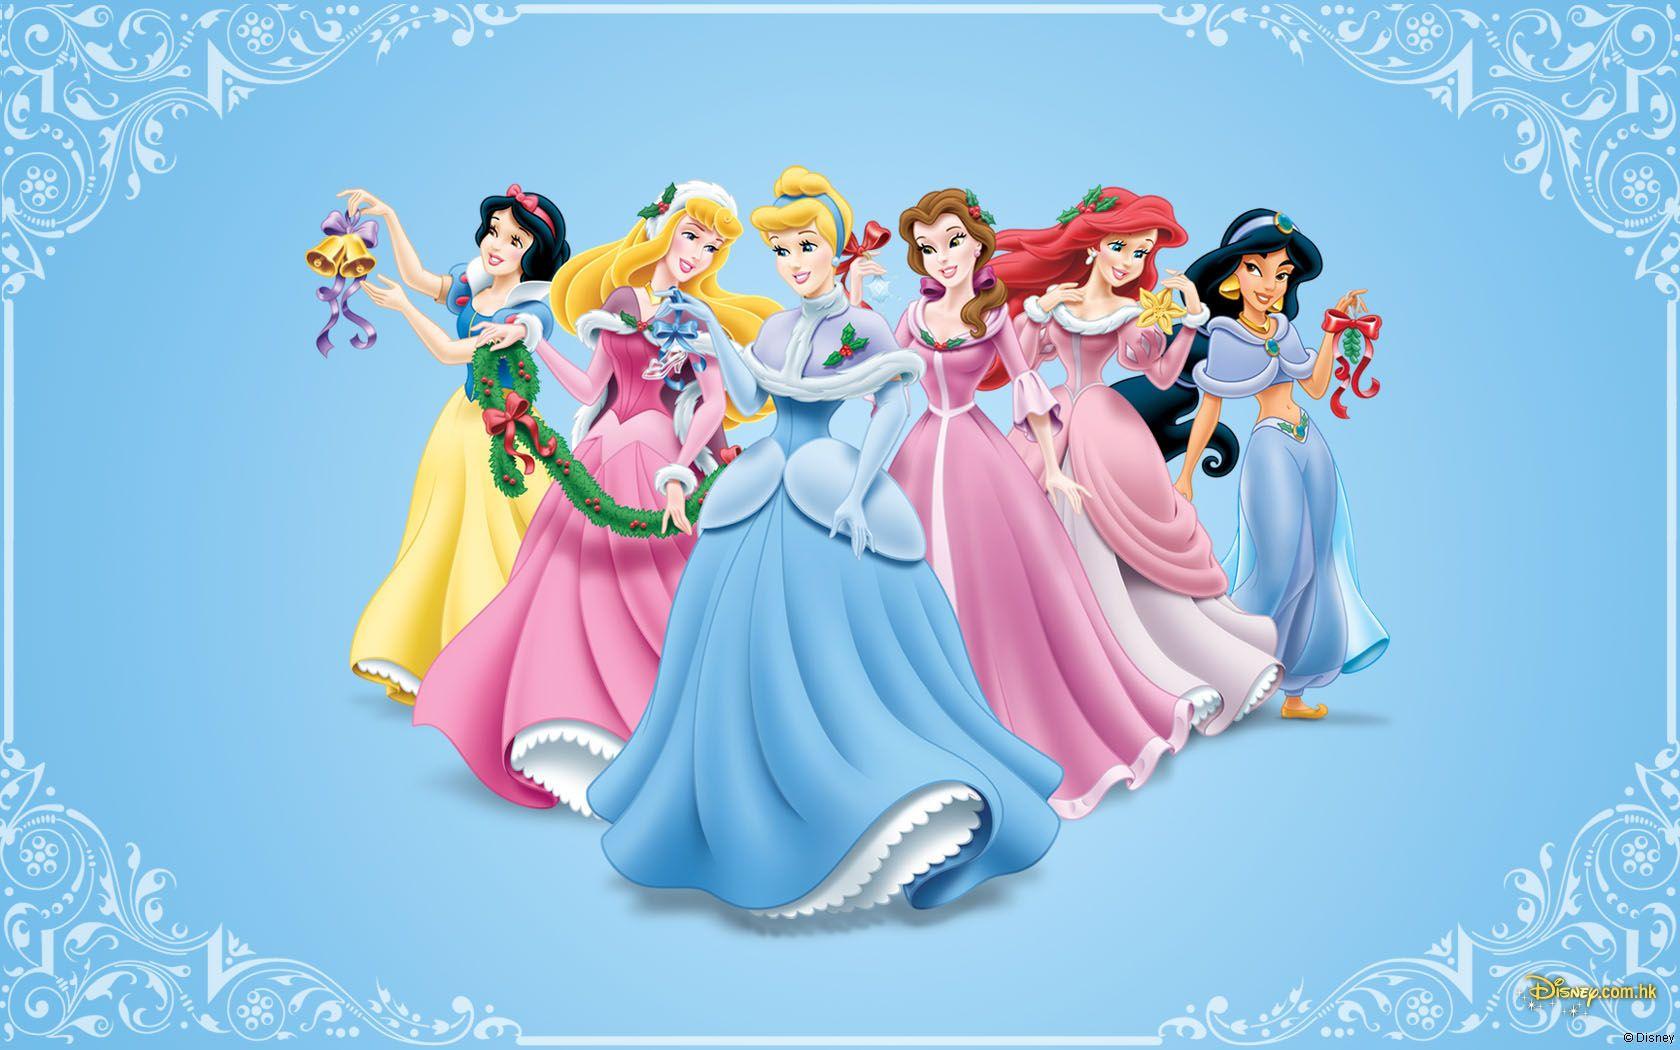 Disney Christmas Wallpaper: Disney Princess Christmas. Disney princess wallpaper, Disney princess cartoons, Disney princess image